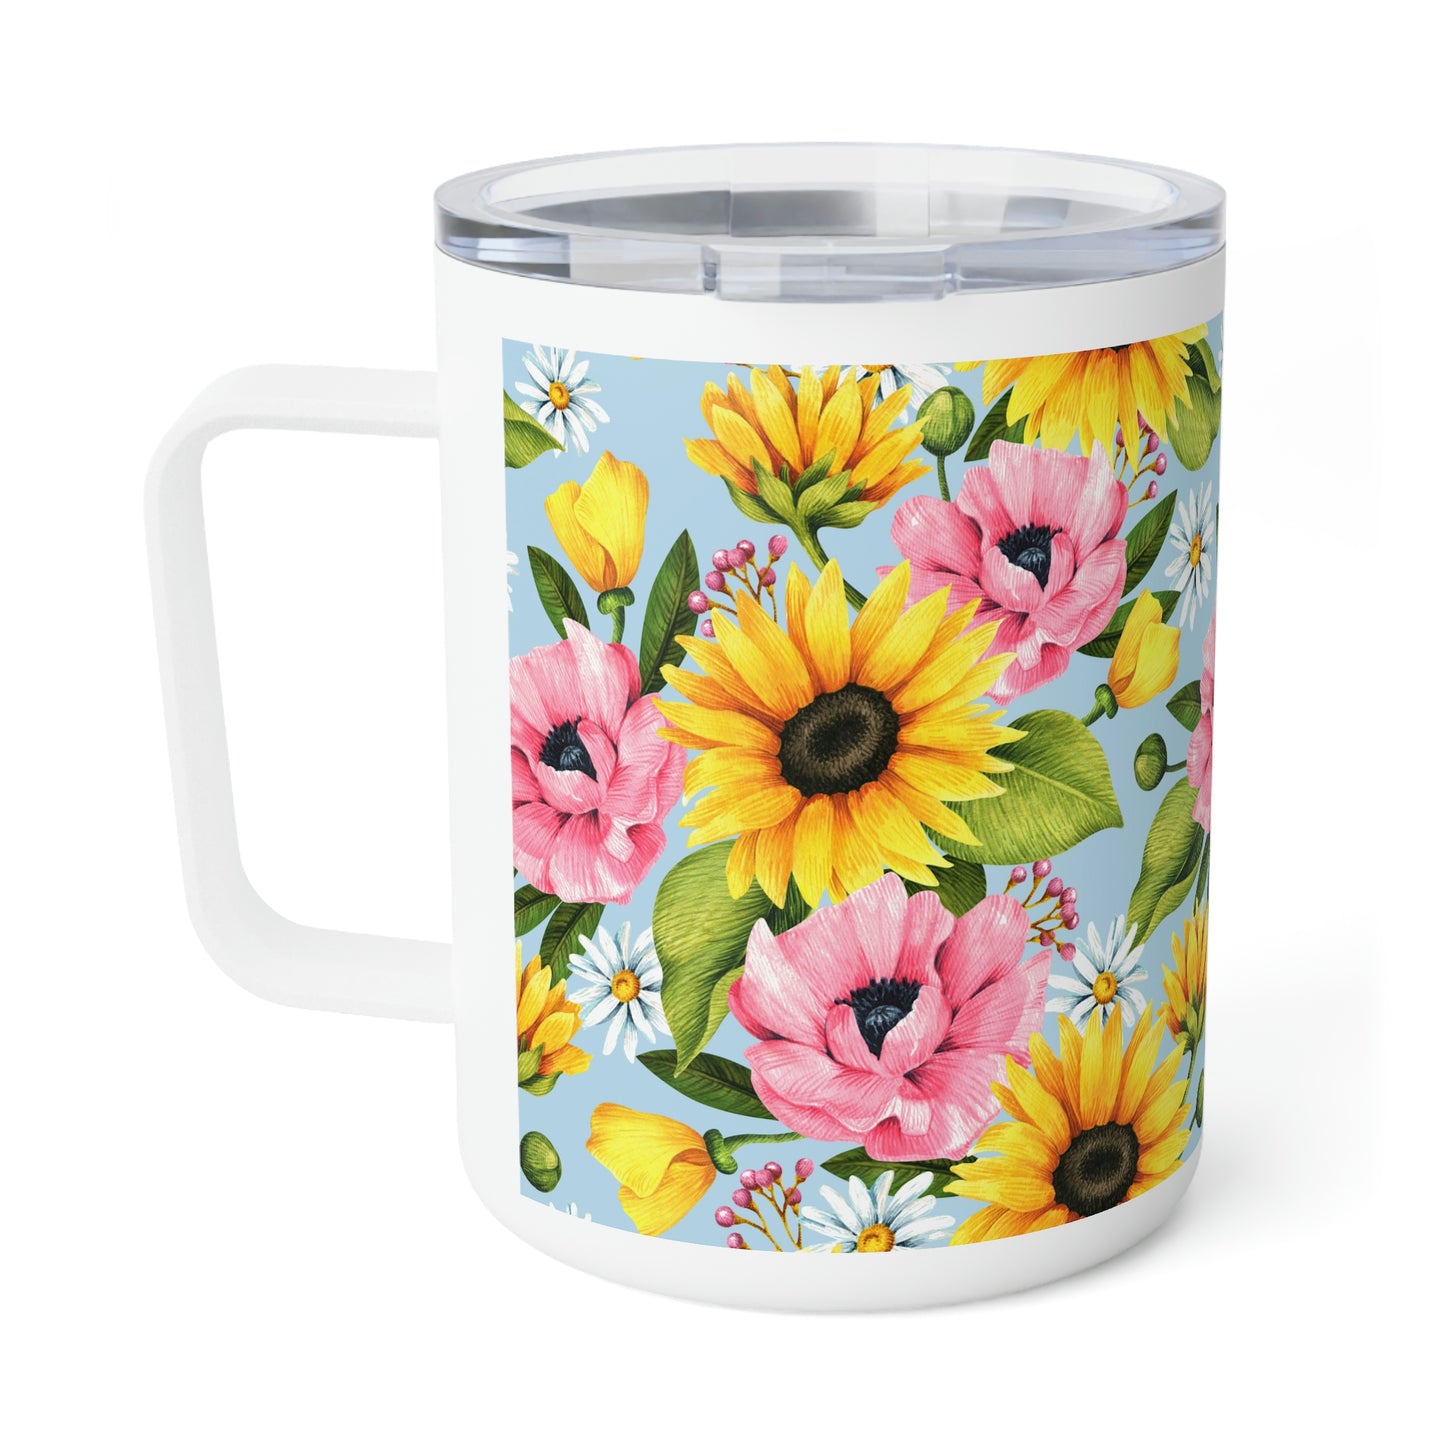 Sunflowers Insulated Coffee Mug, 10oz